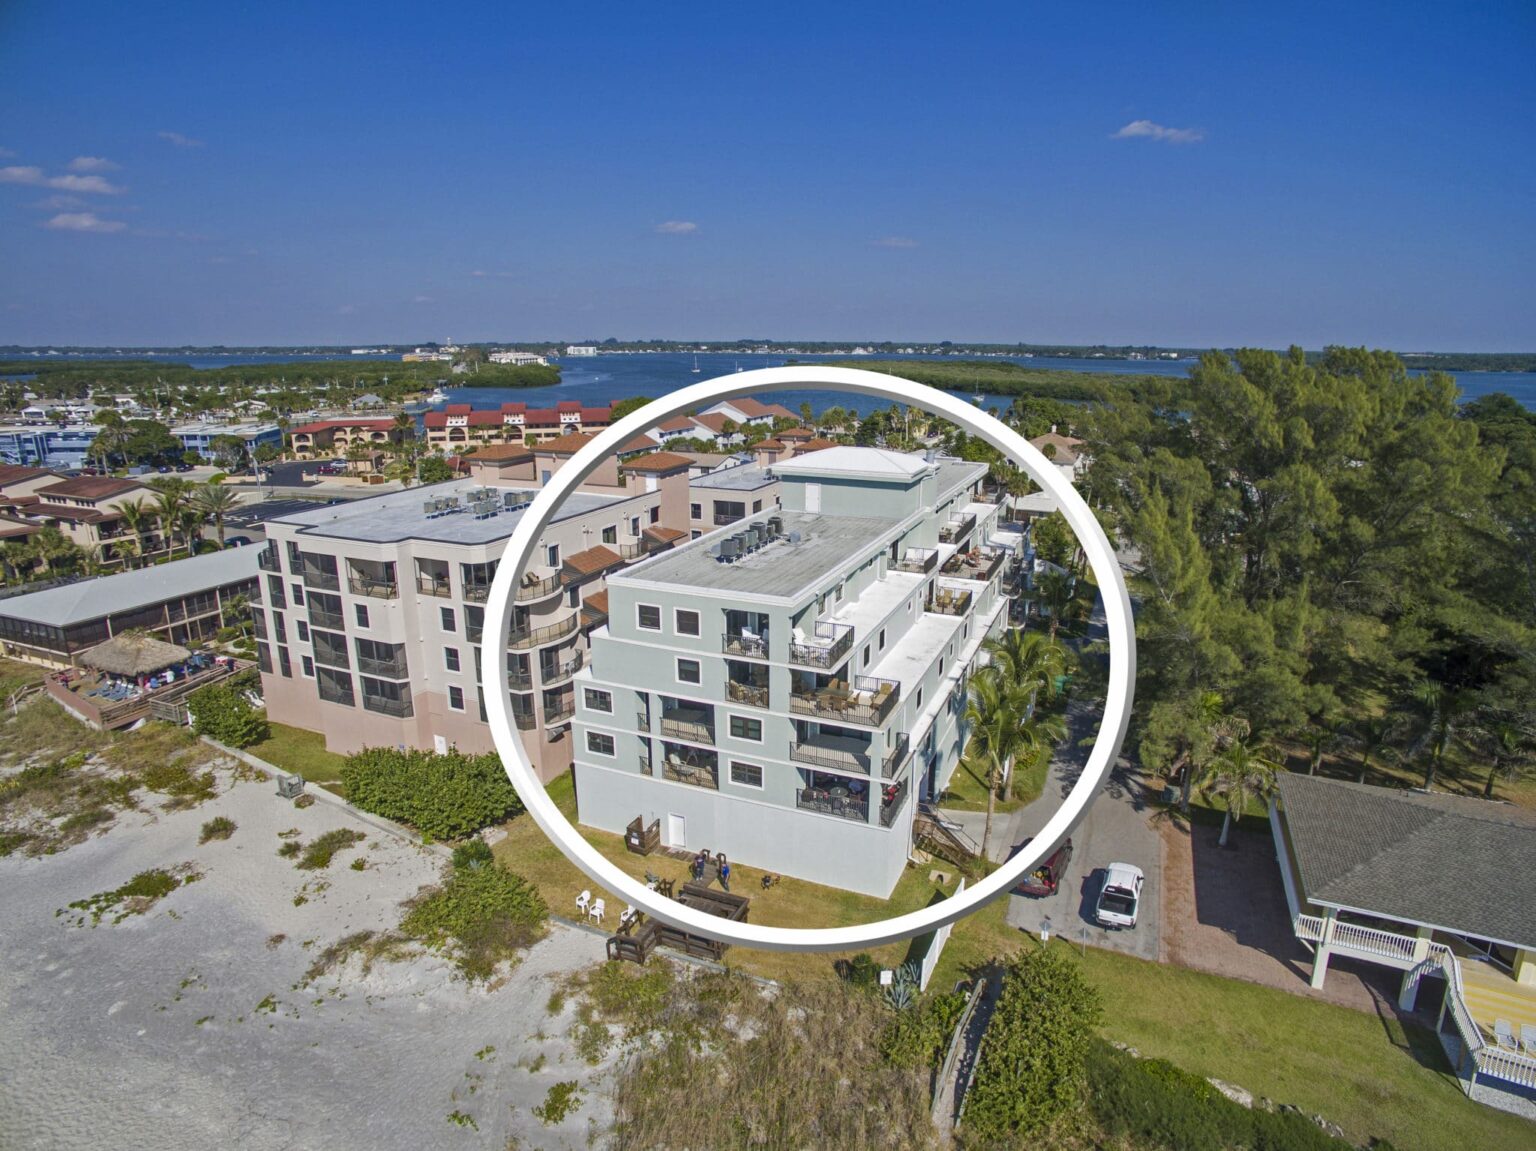 aerial view of multi story palms condominiums buildings